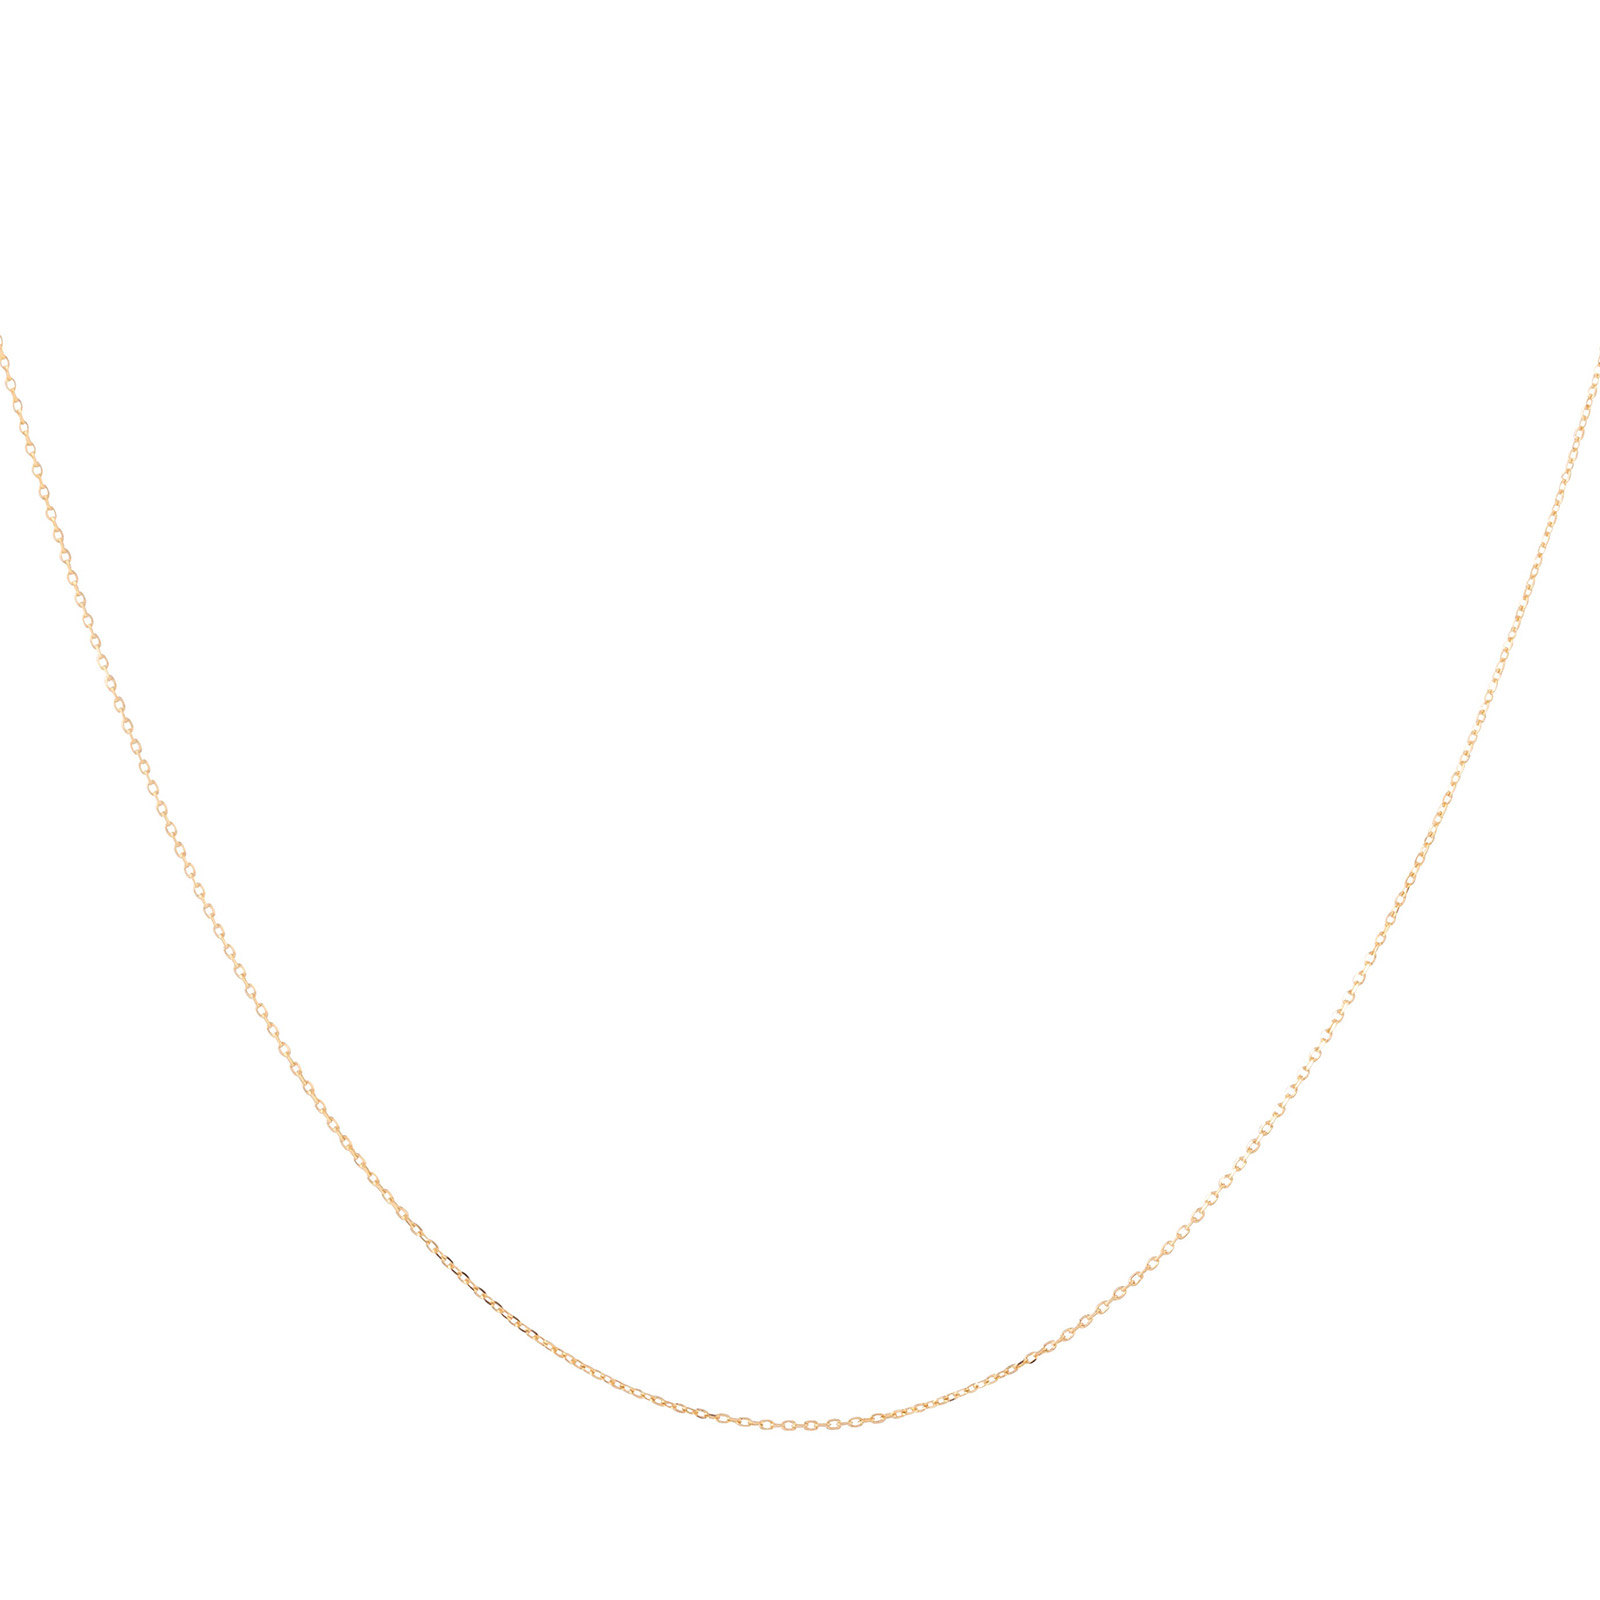 Halsband 18k guld - Ankarkedja 45+5 cm